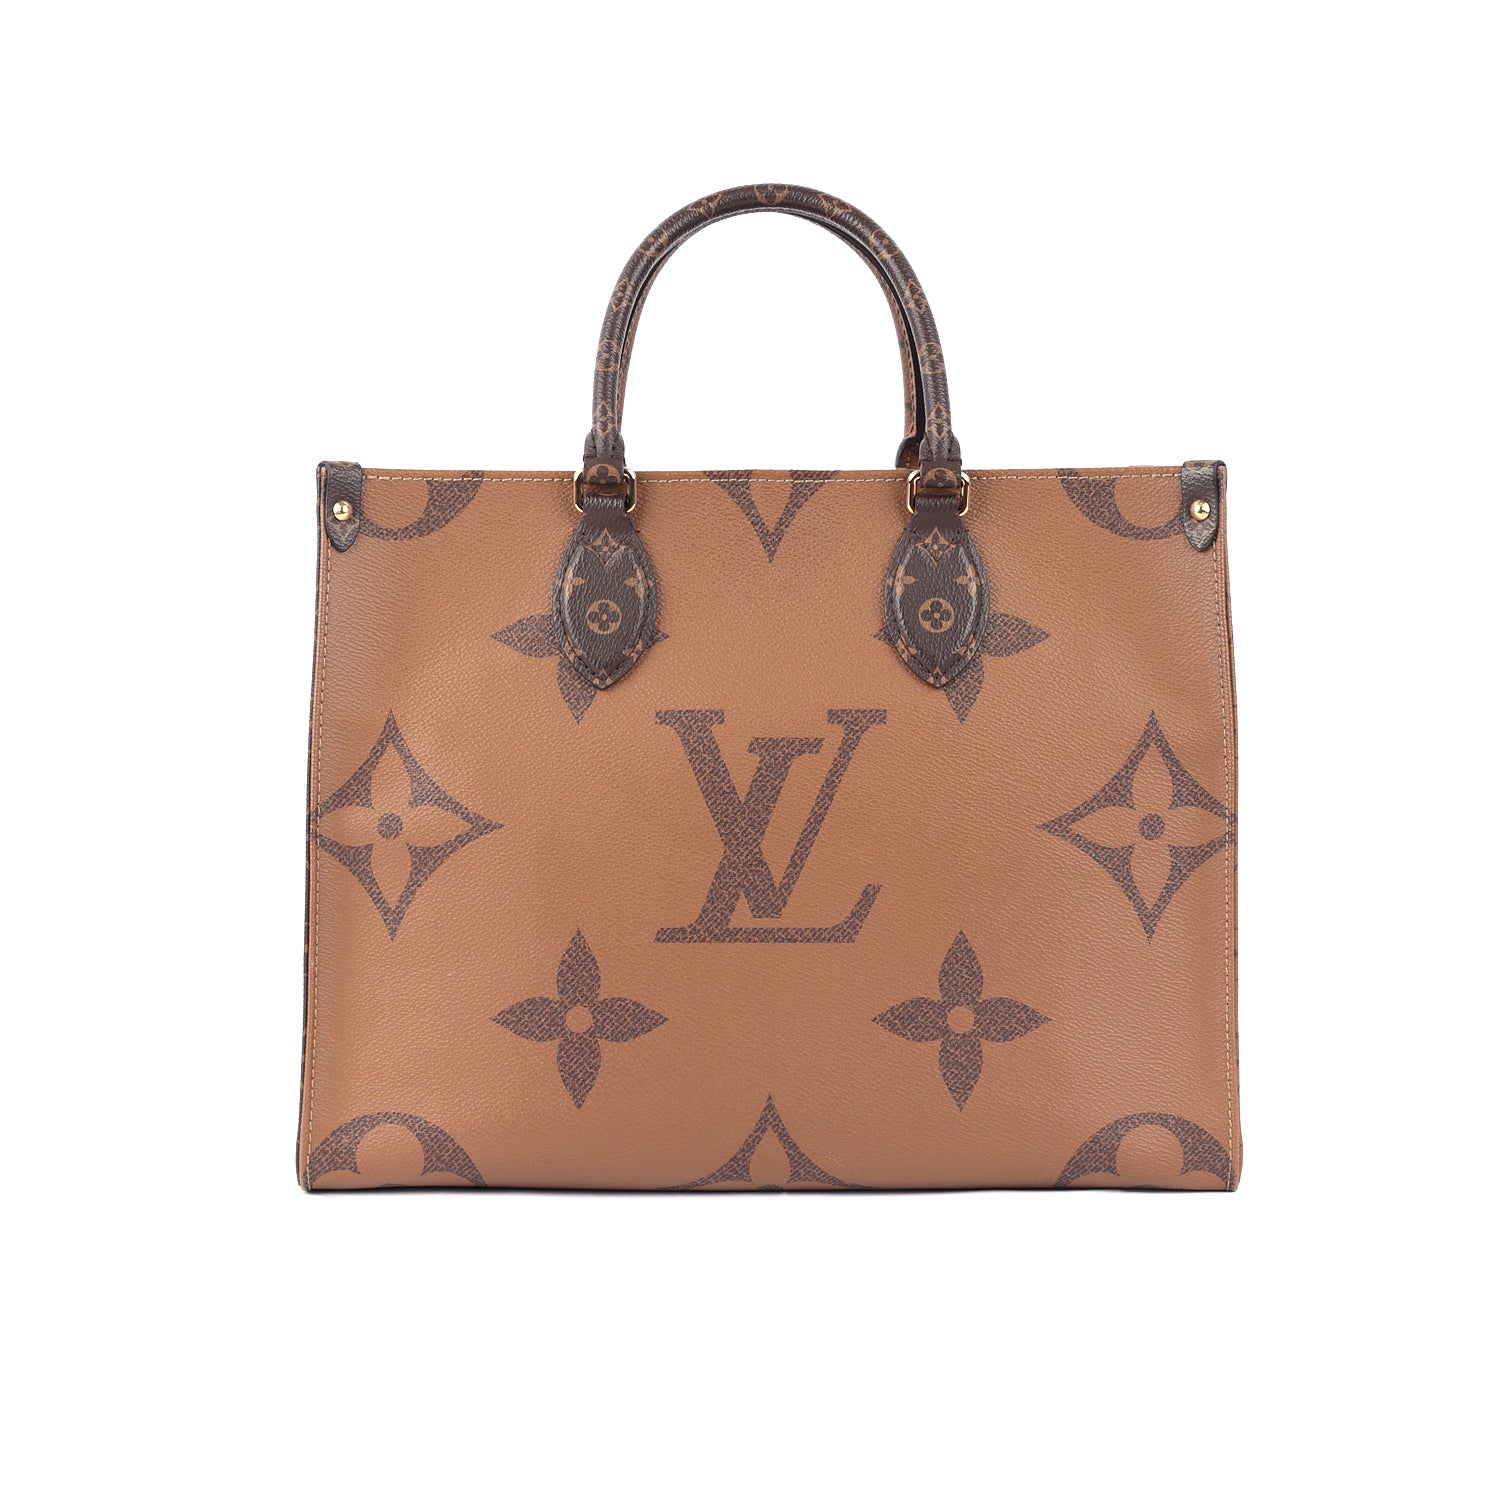 Louis Vuitton OnTheGo Monogram Canvas Tote bag